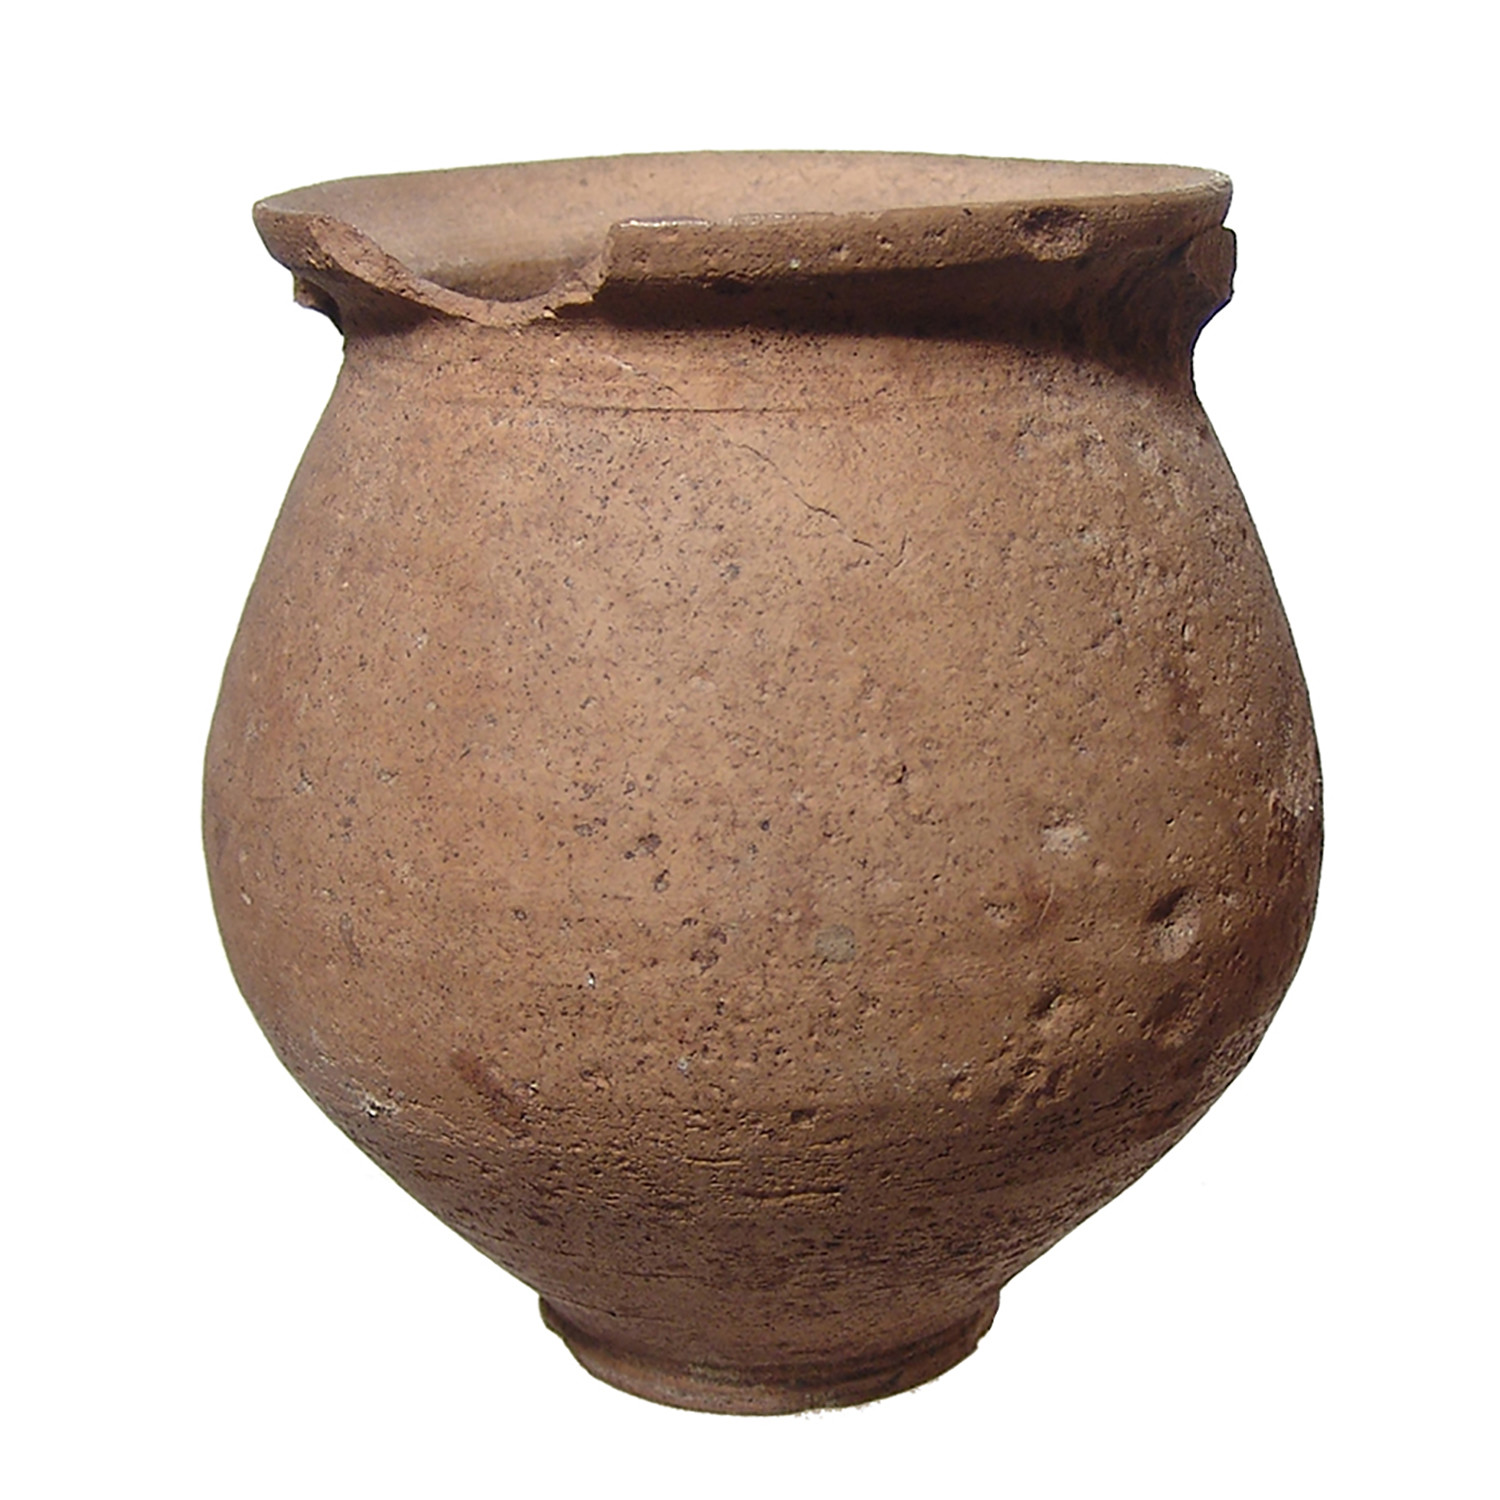  Roman  Ceramic  Jar From The Holy Land C 1St 3Rd 